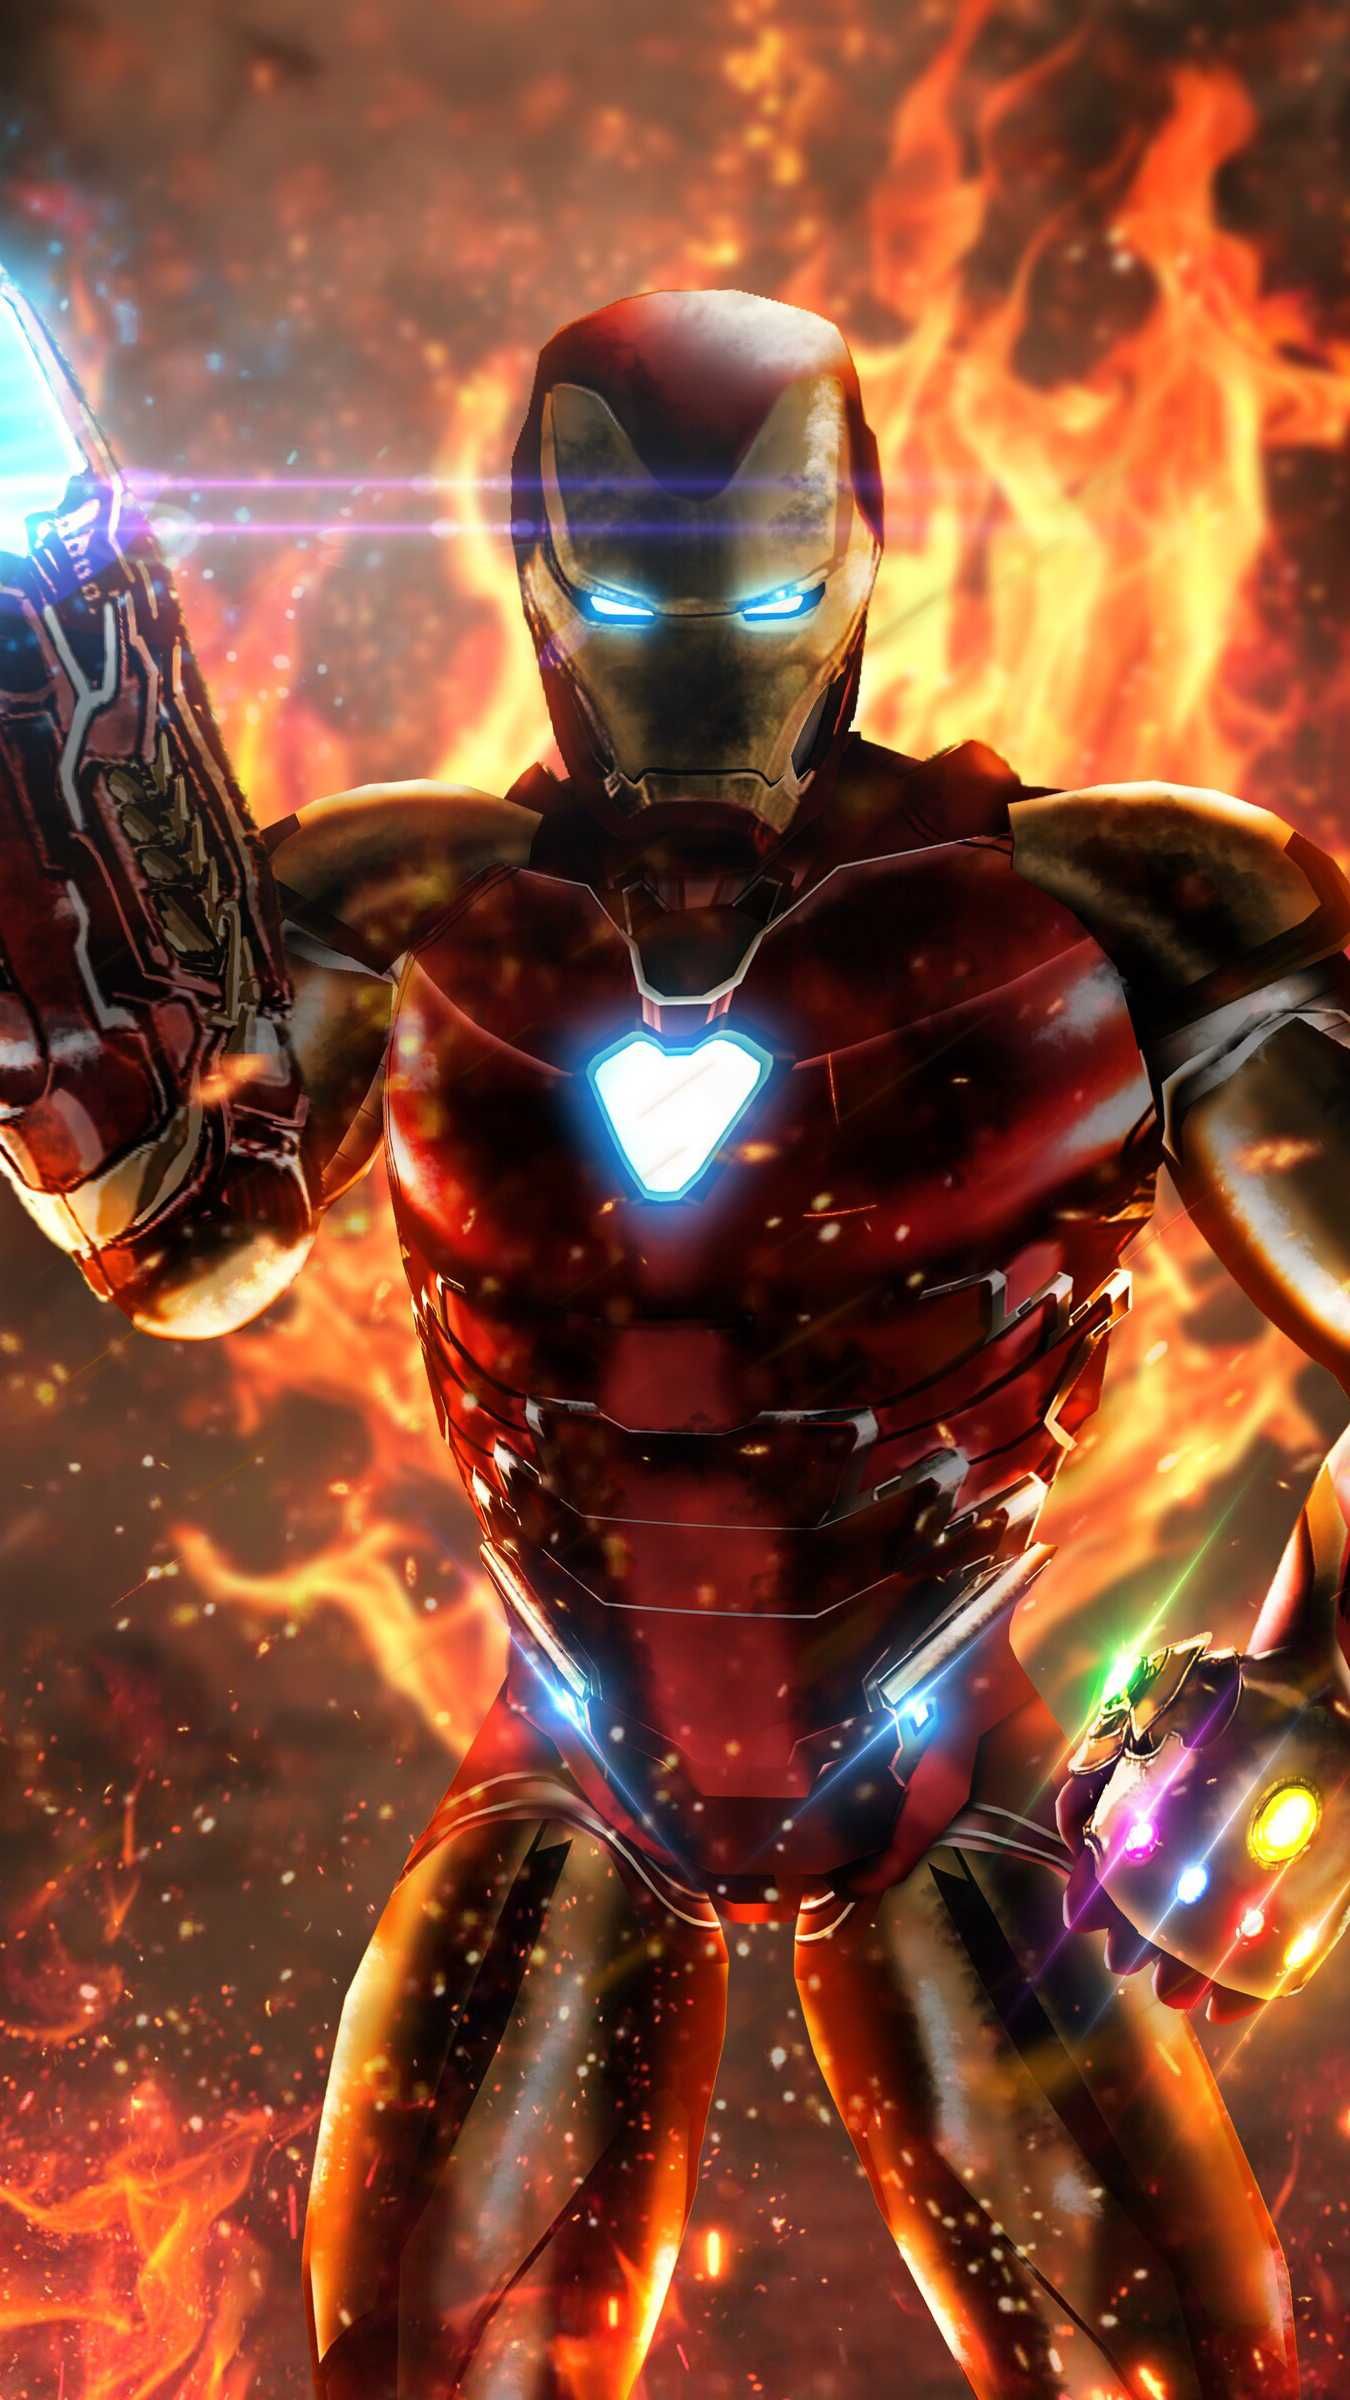 Iron Man Infinity Stone Weapon IPhone Wallpaper. Avengers wallpaper, Iron man, Iron man wallpaper